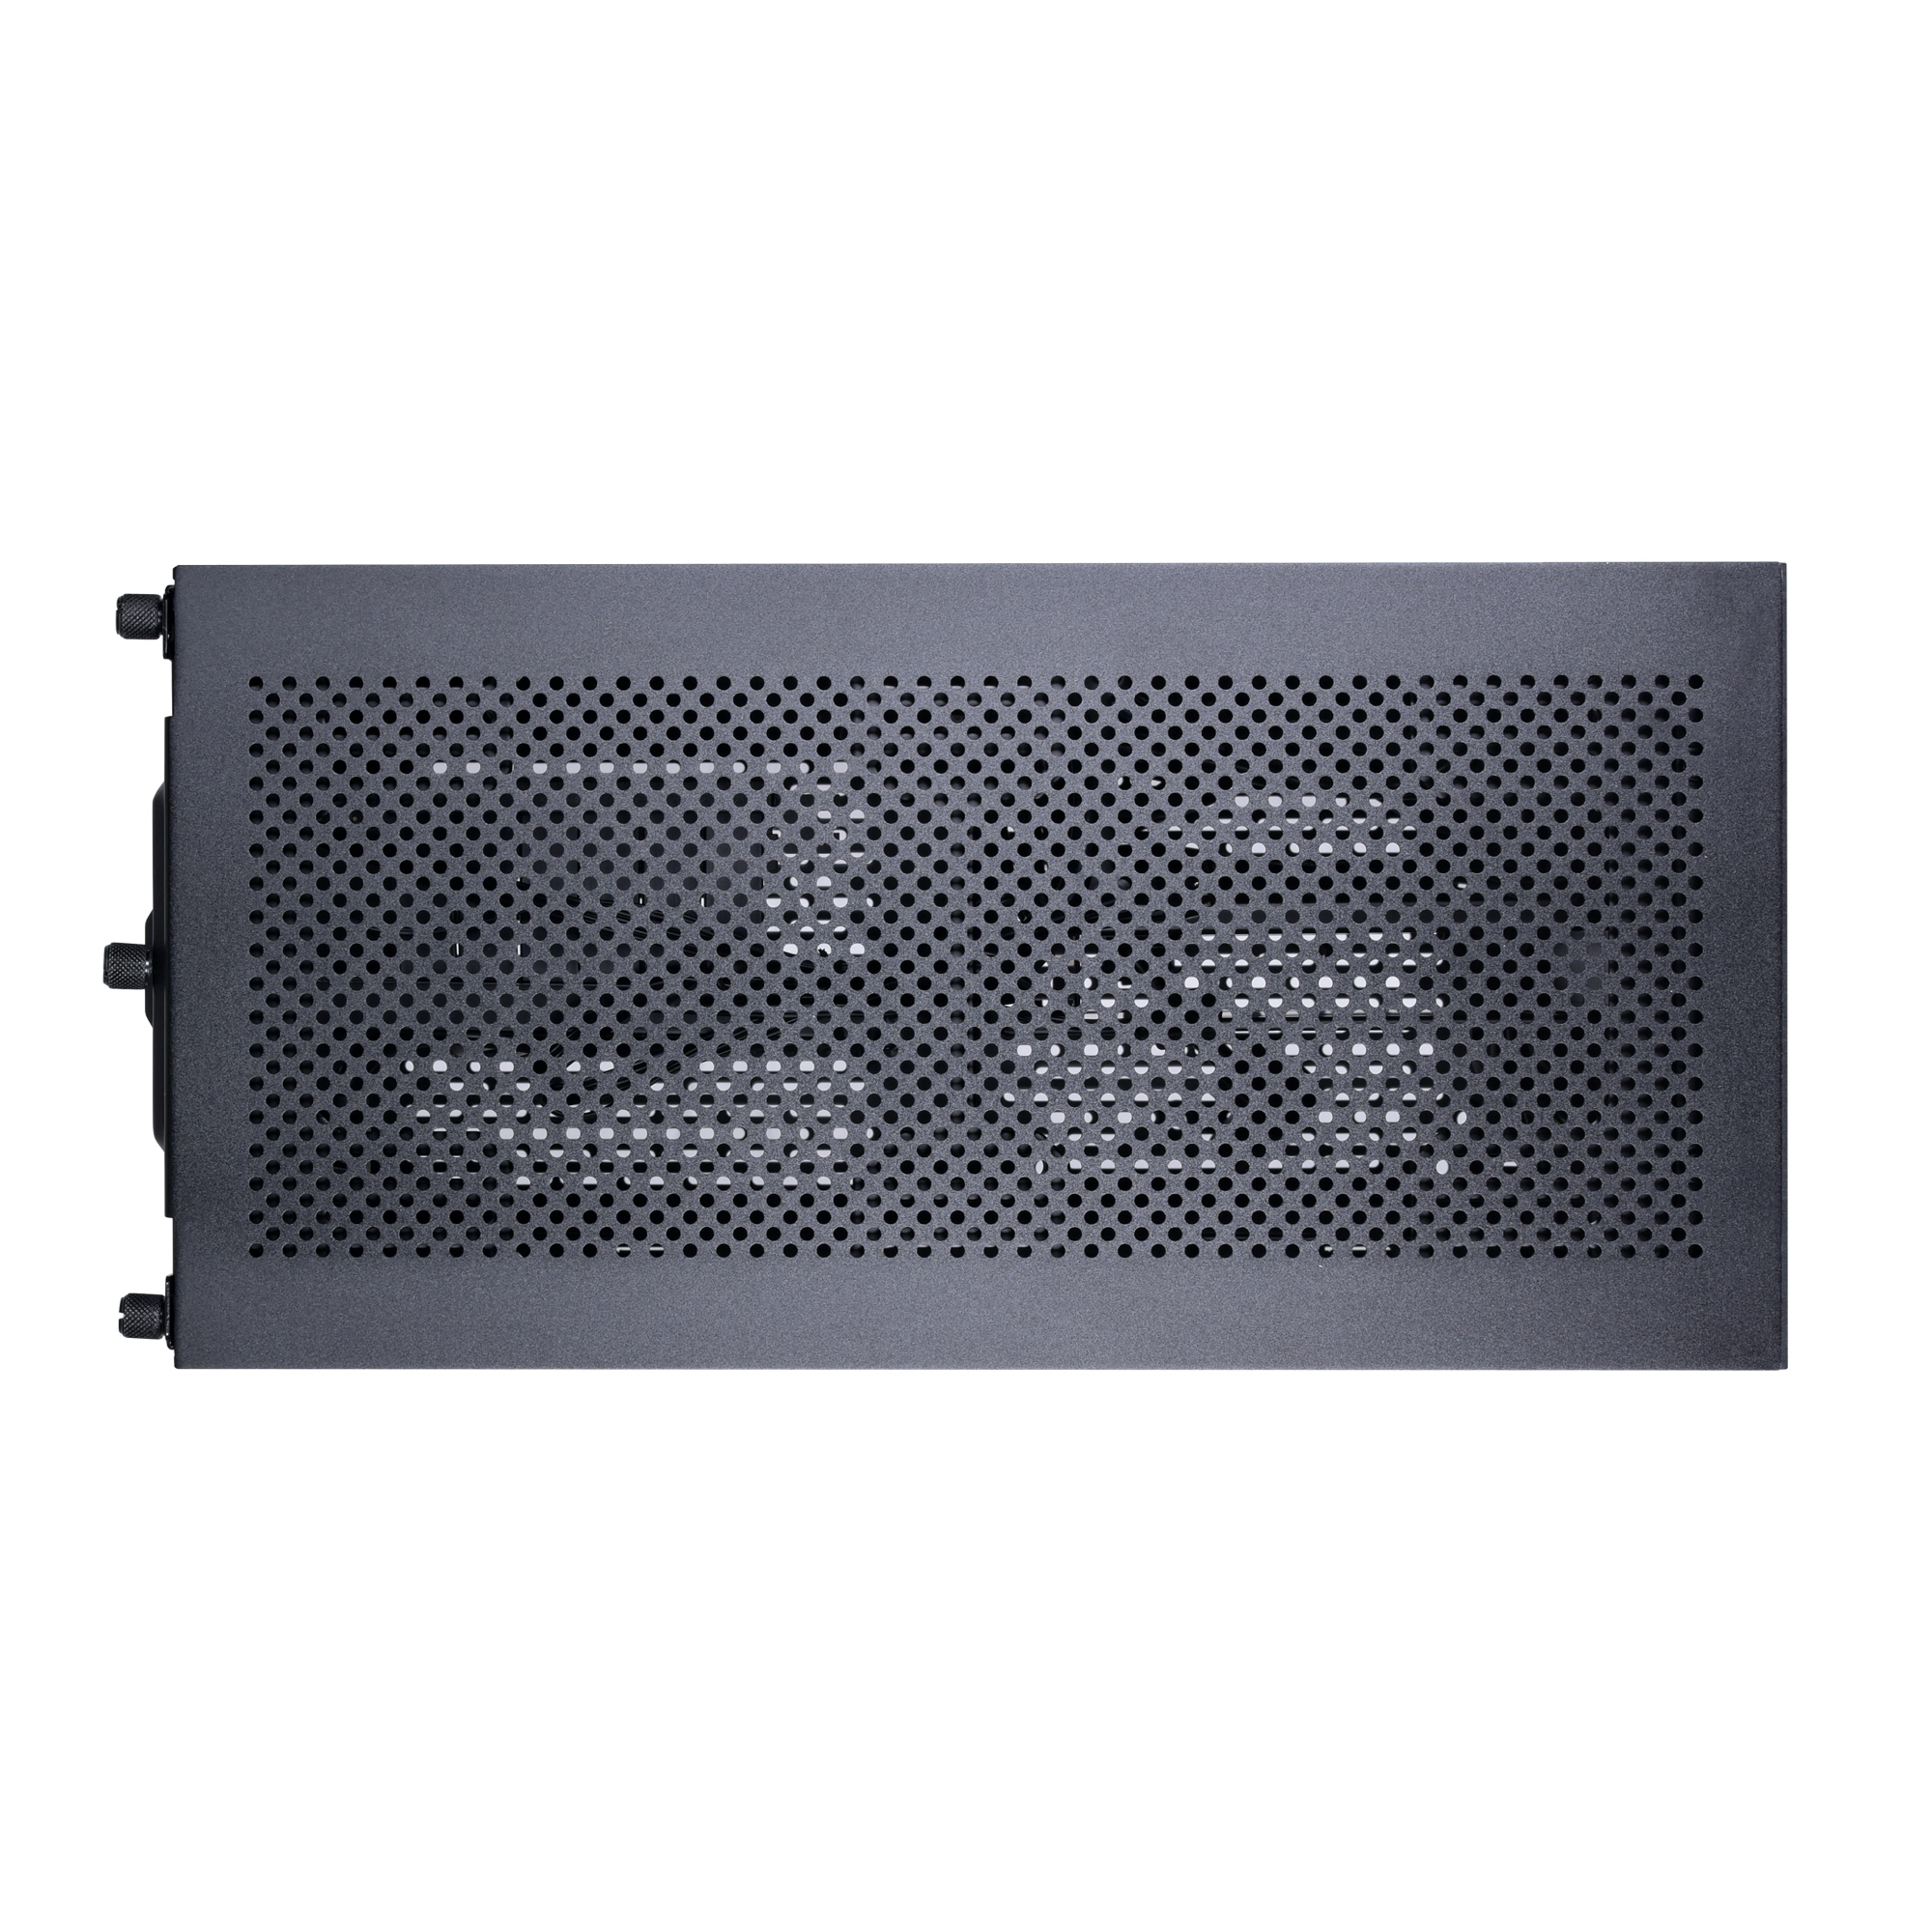 Lian Li Q58 X3 ITX Tempered Glass - schwarz PCIE 3.0 Edition